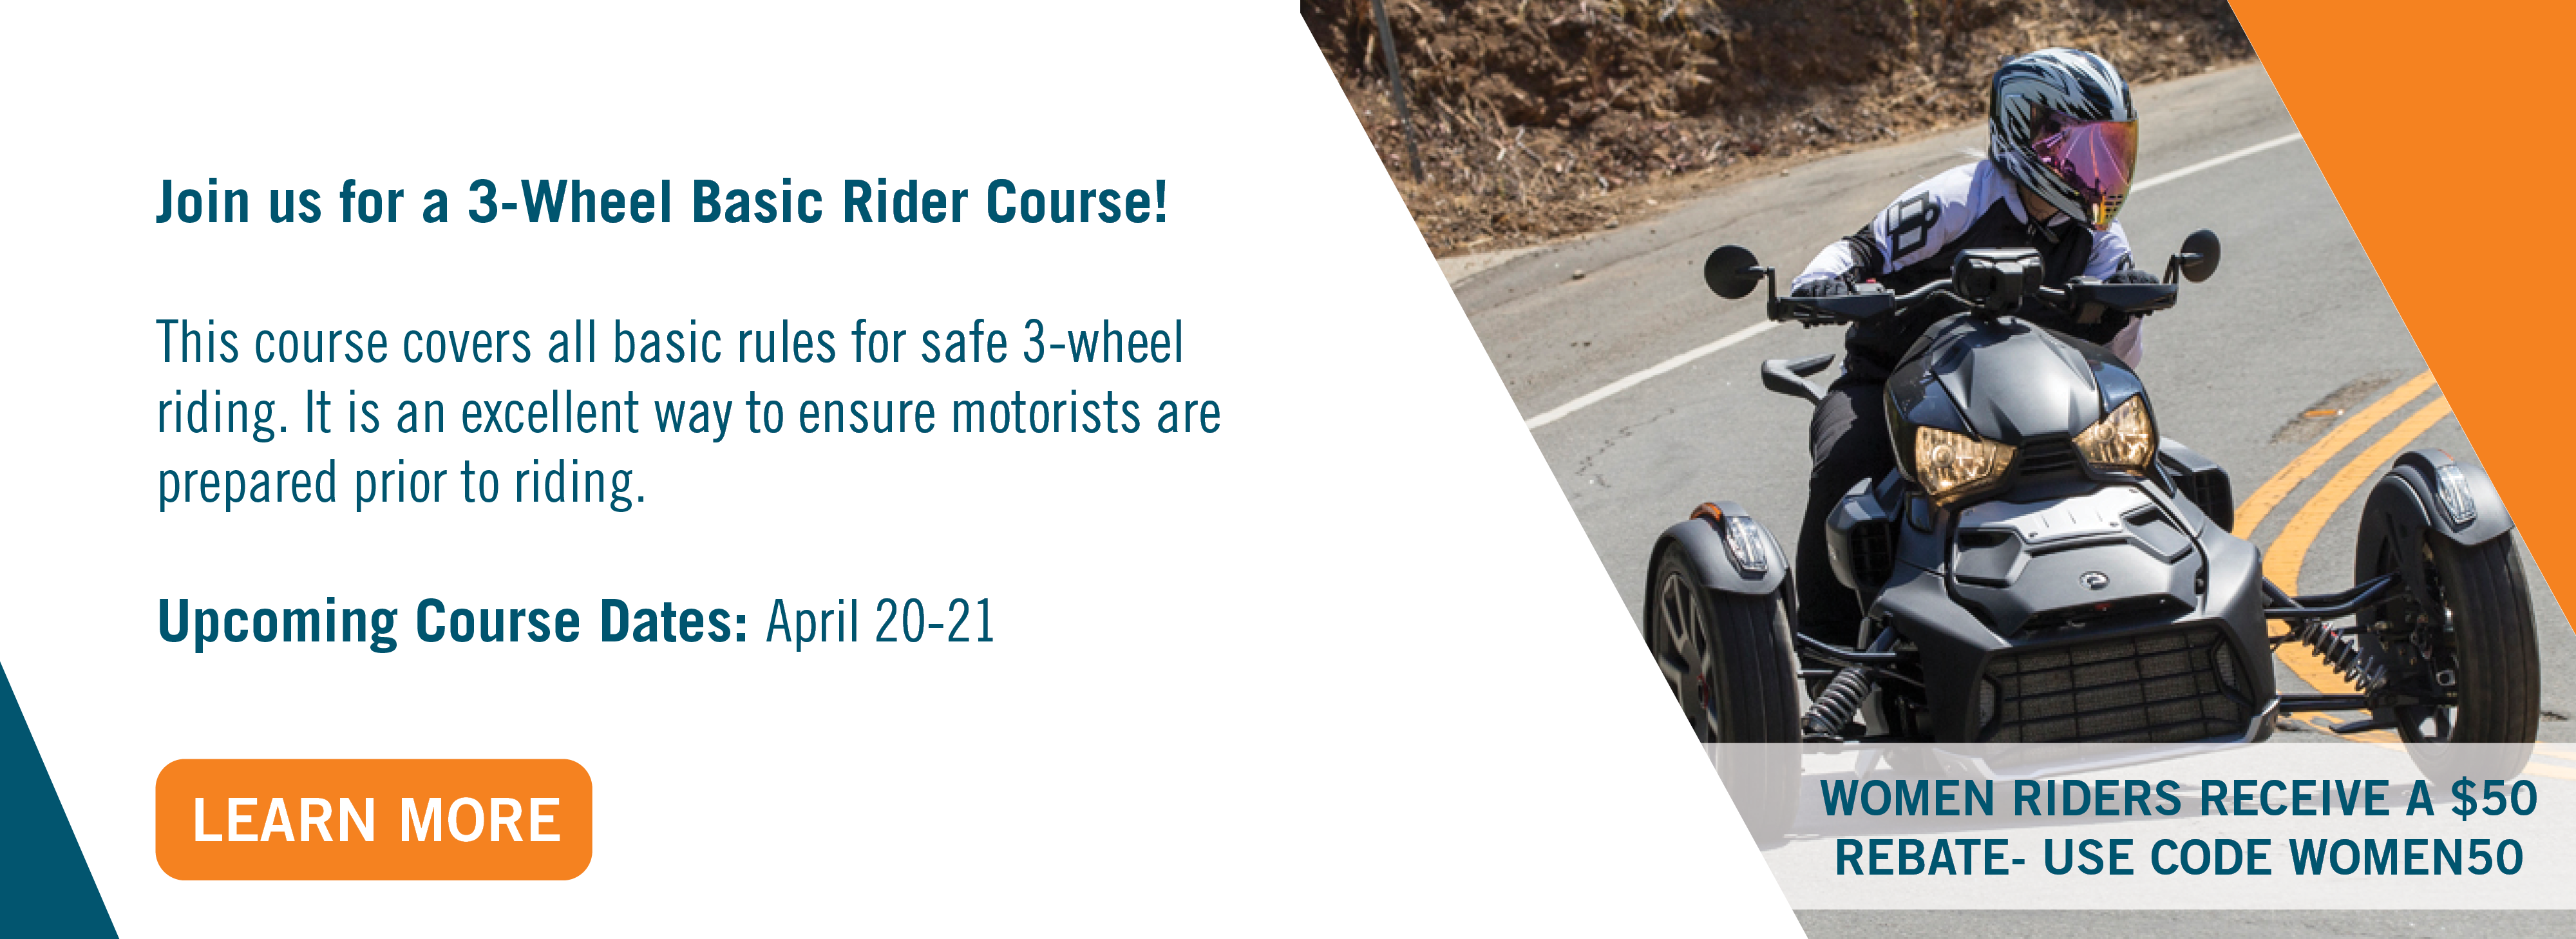 3-Wheel_Basic_Rider_Course_Training_slider